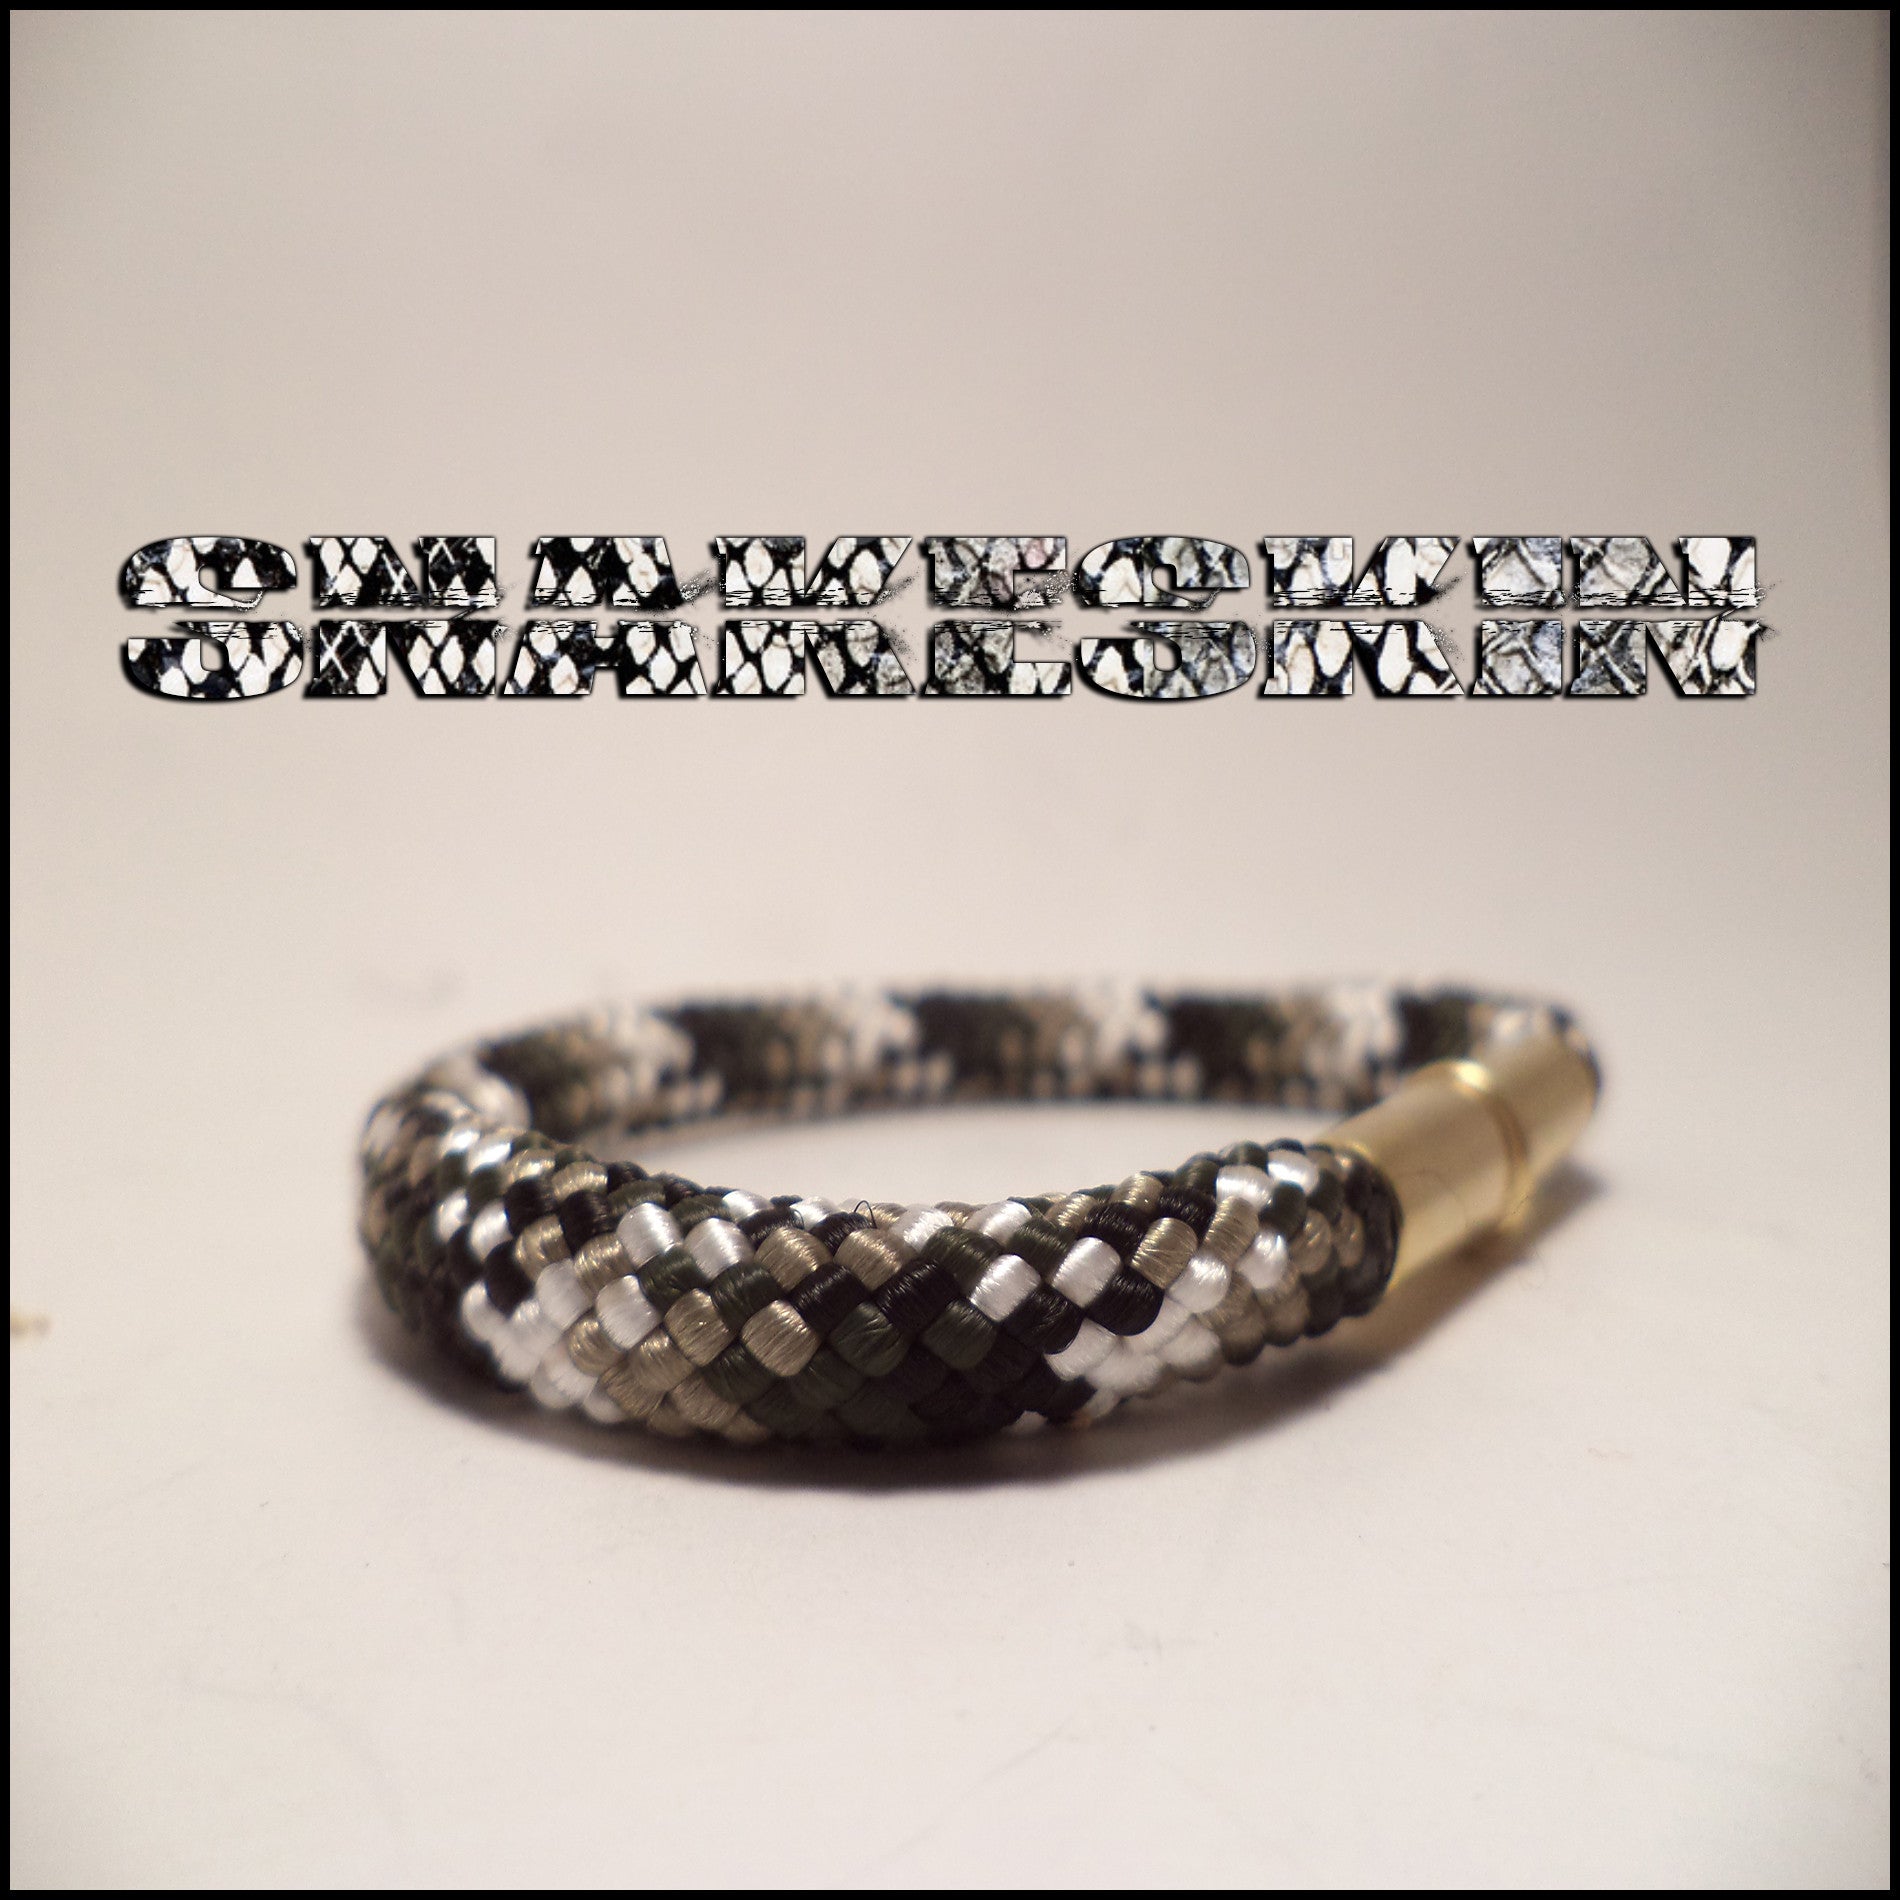 snakeskin beararms bracelet mini jewelry